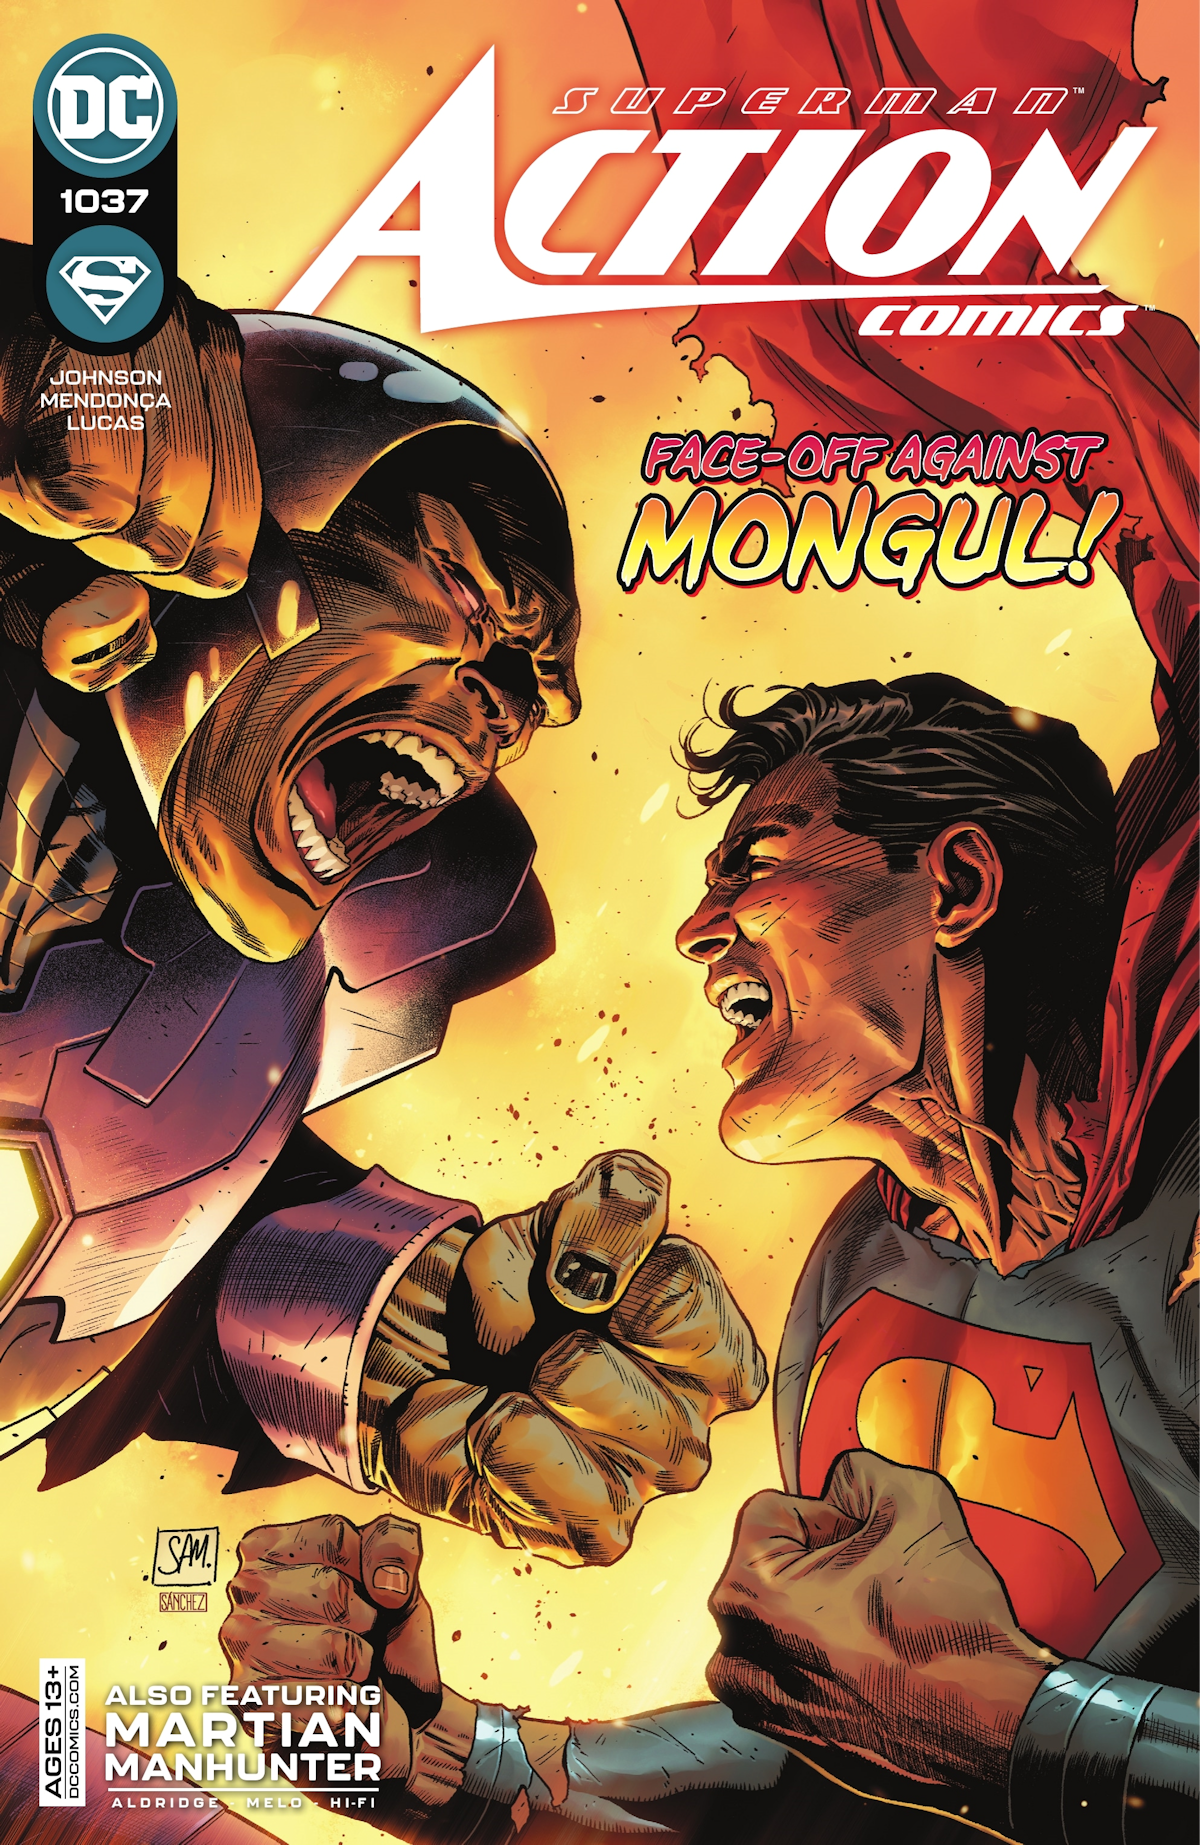 Action Comics 1037 (Cover A)